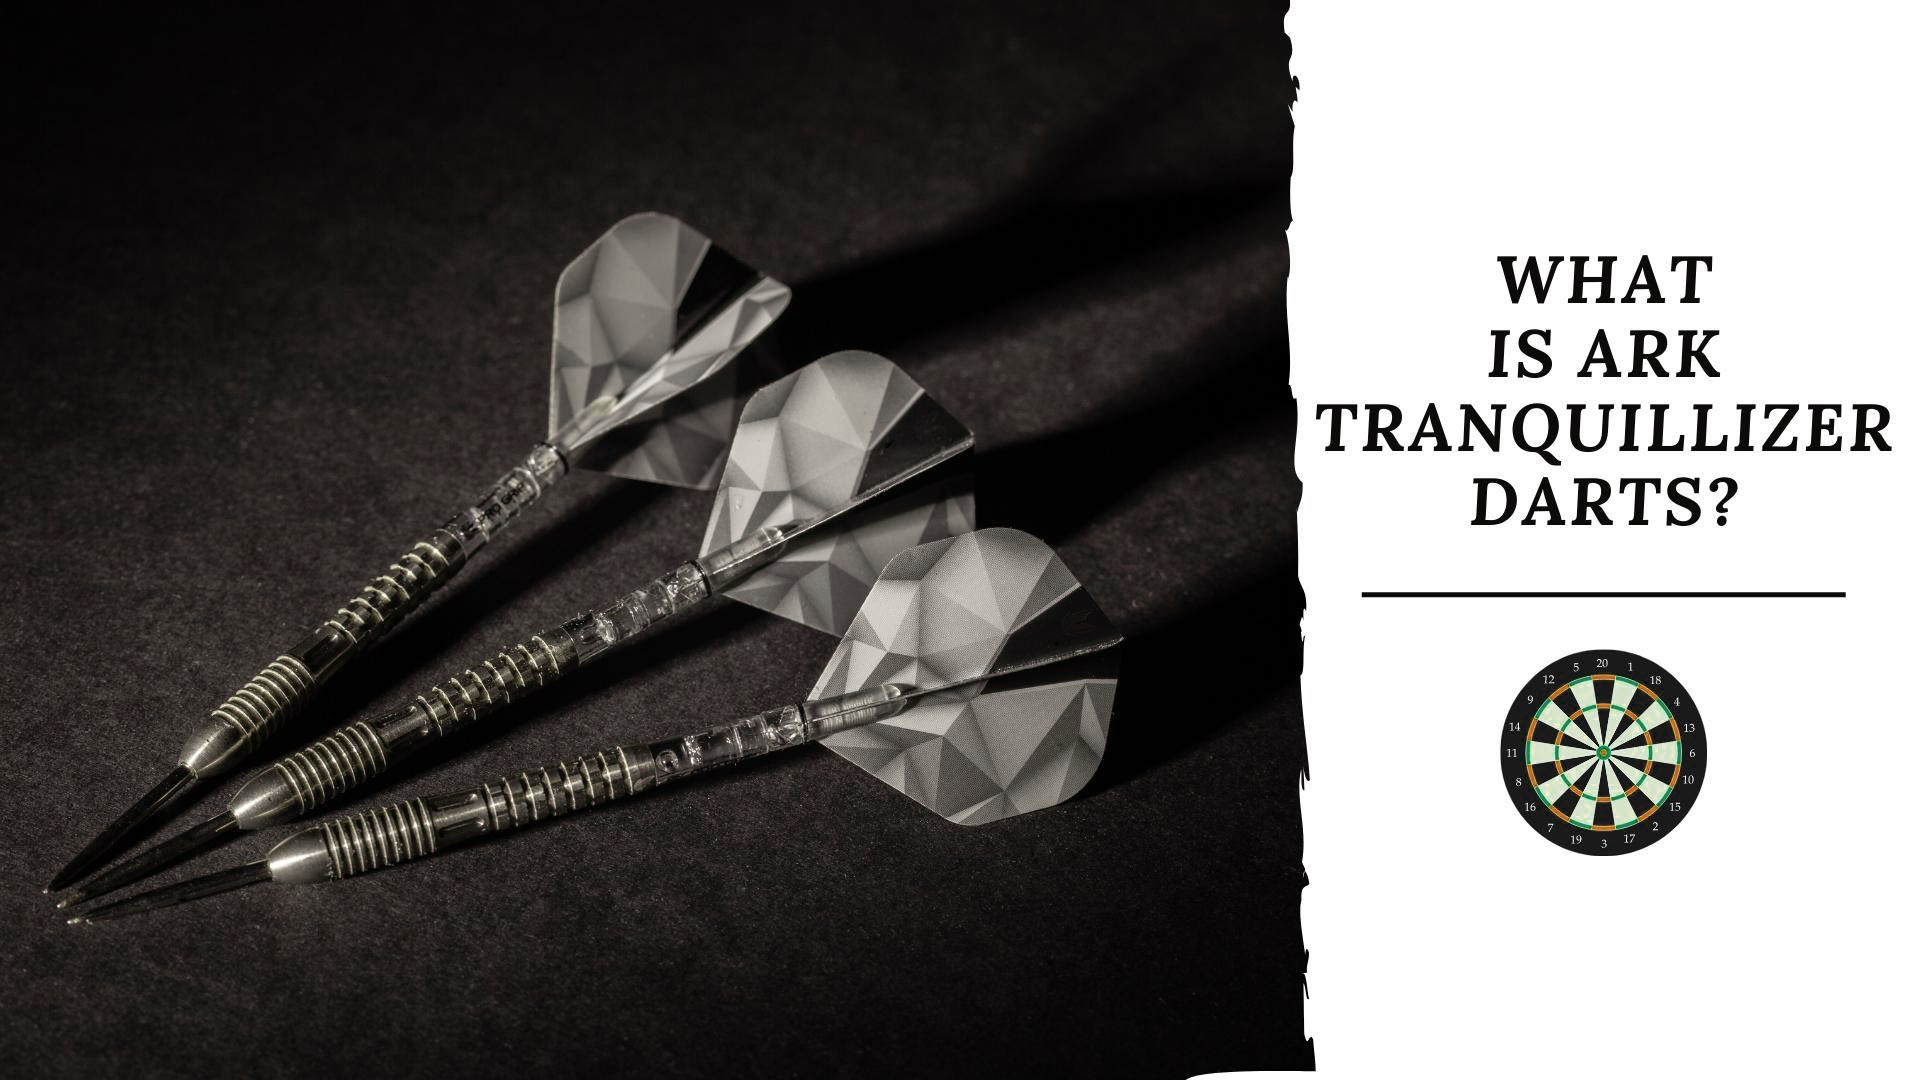 What Is ark tranquillizer darts?